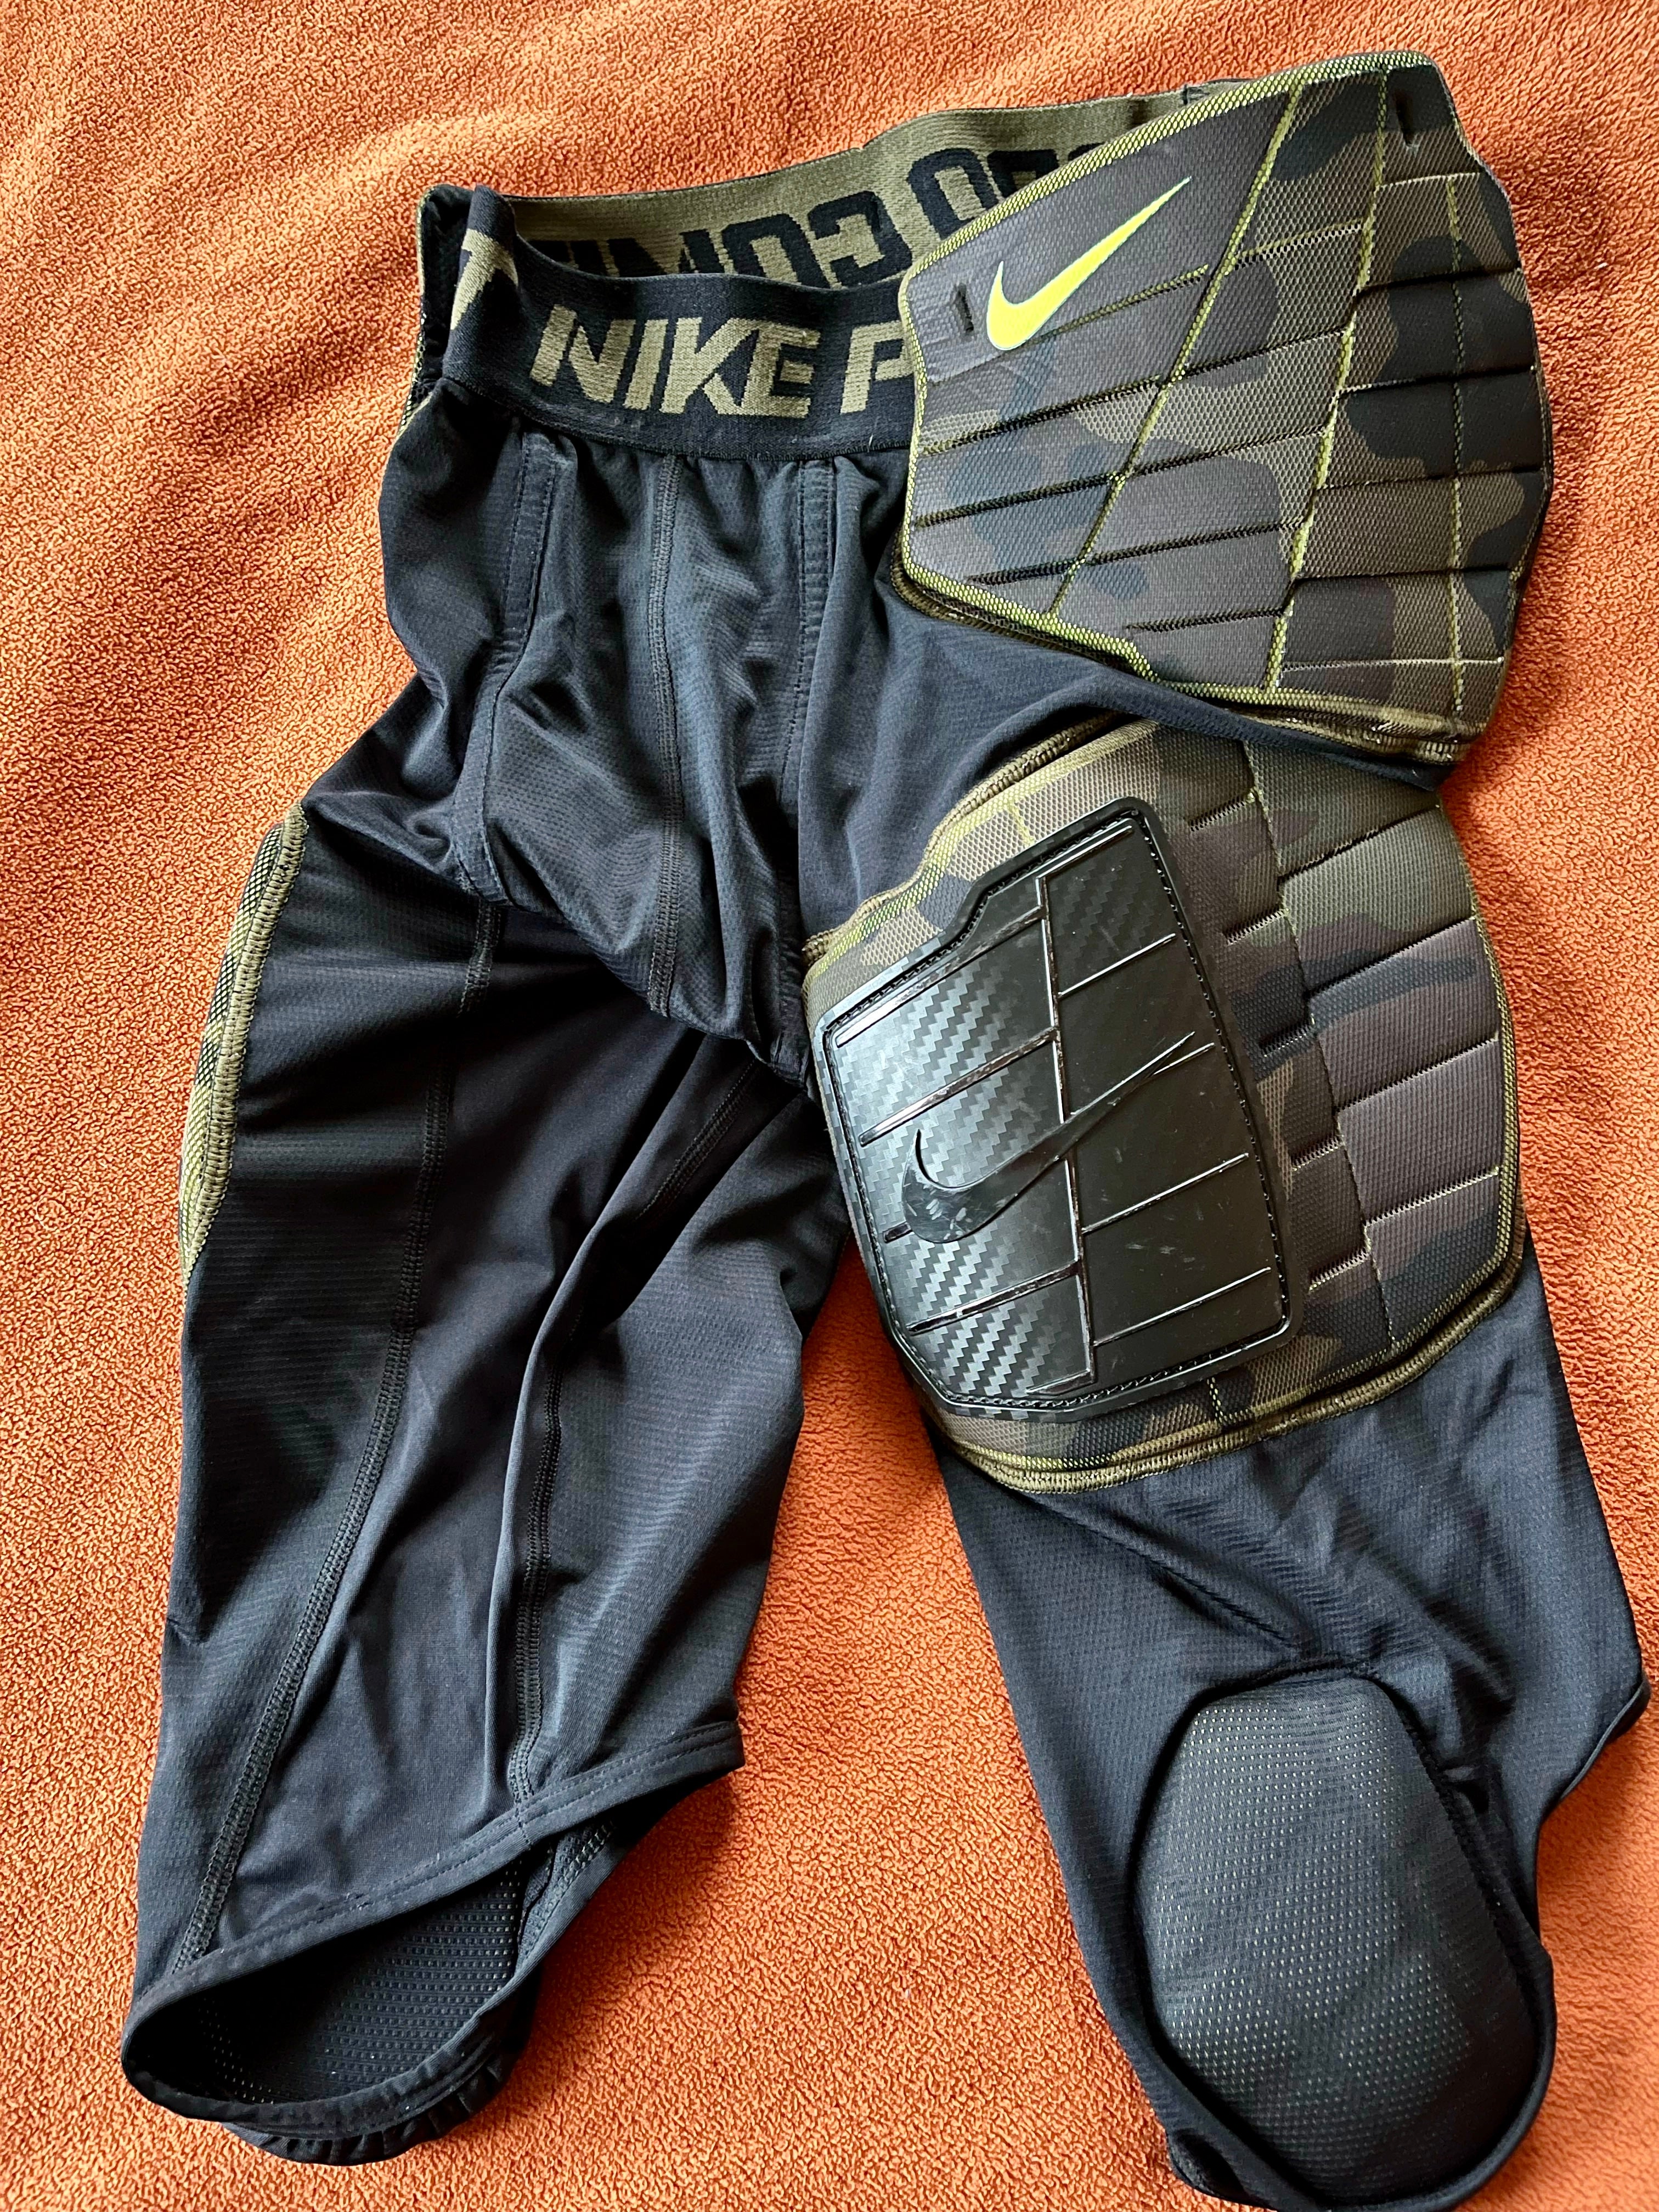 Mens Nike Pro Combat compression padded Basketball Football Shorts